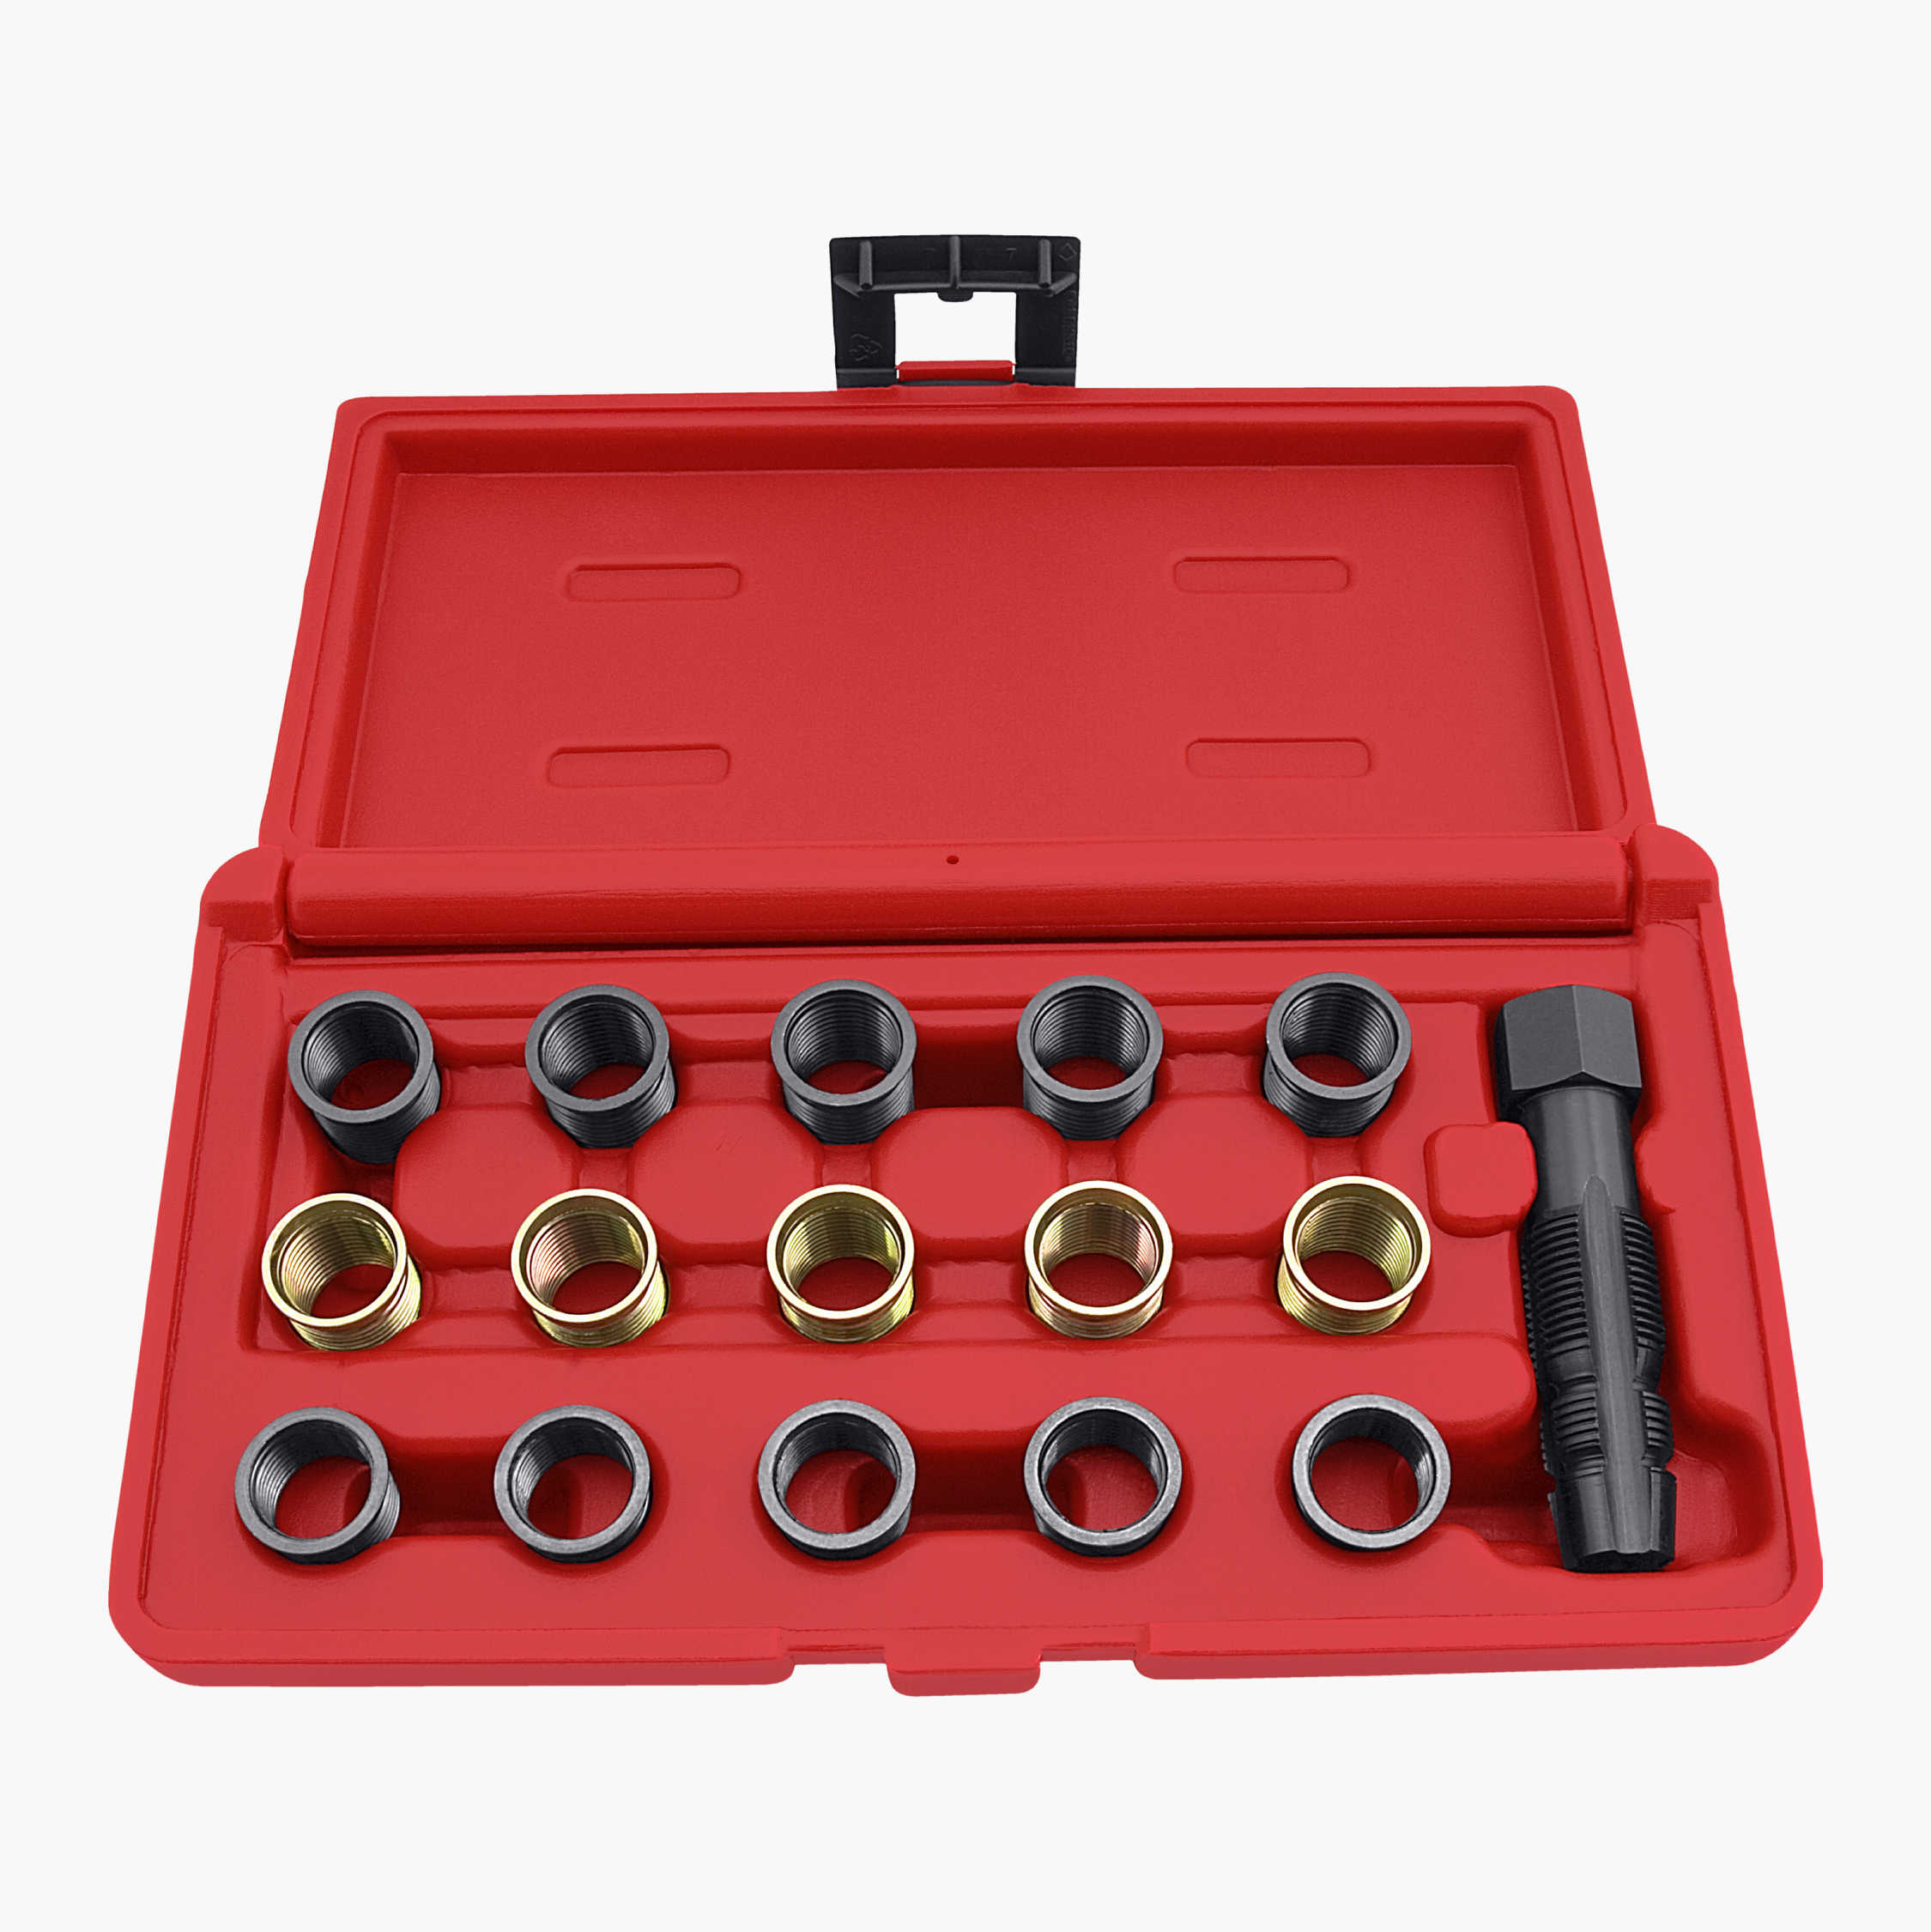 Houseen Spark Plug Thread Repair Kit As Shown 16pcs/Set Professional Spark Plug Restore Thread Repair Kit Vehicle Tool Tap Tool with Portable Case 